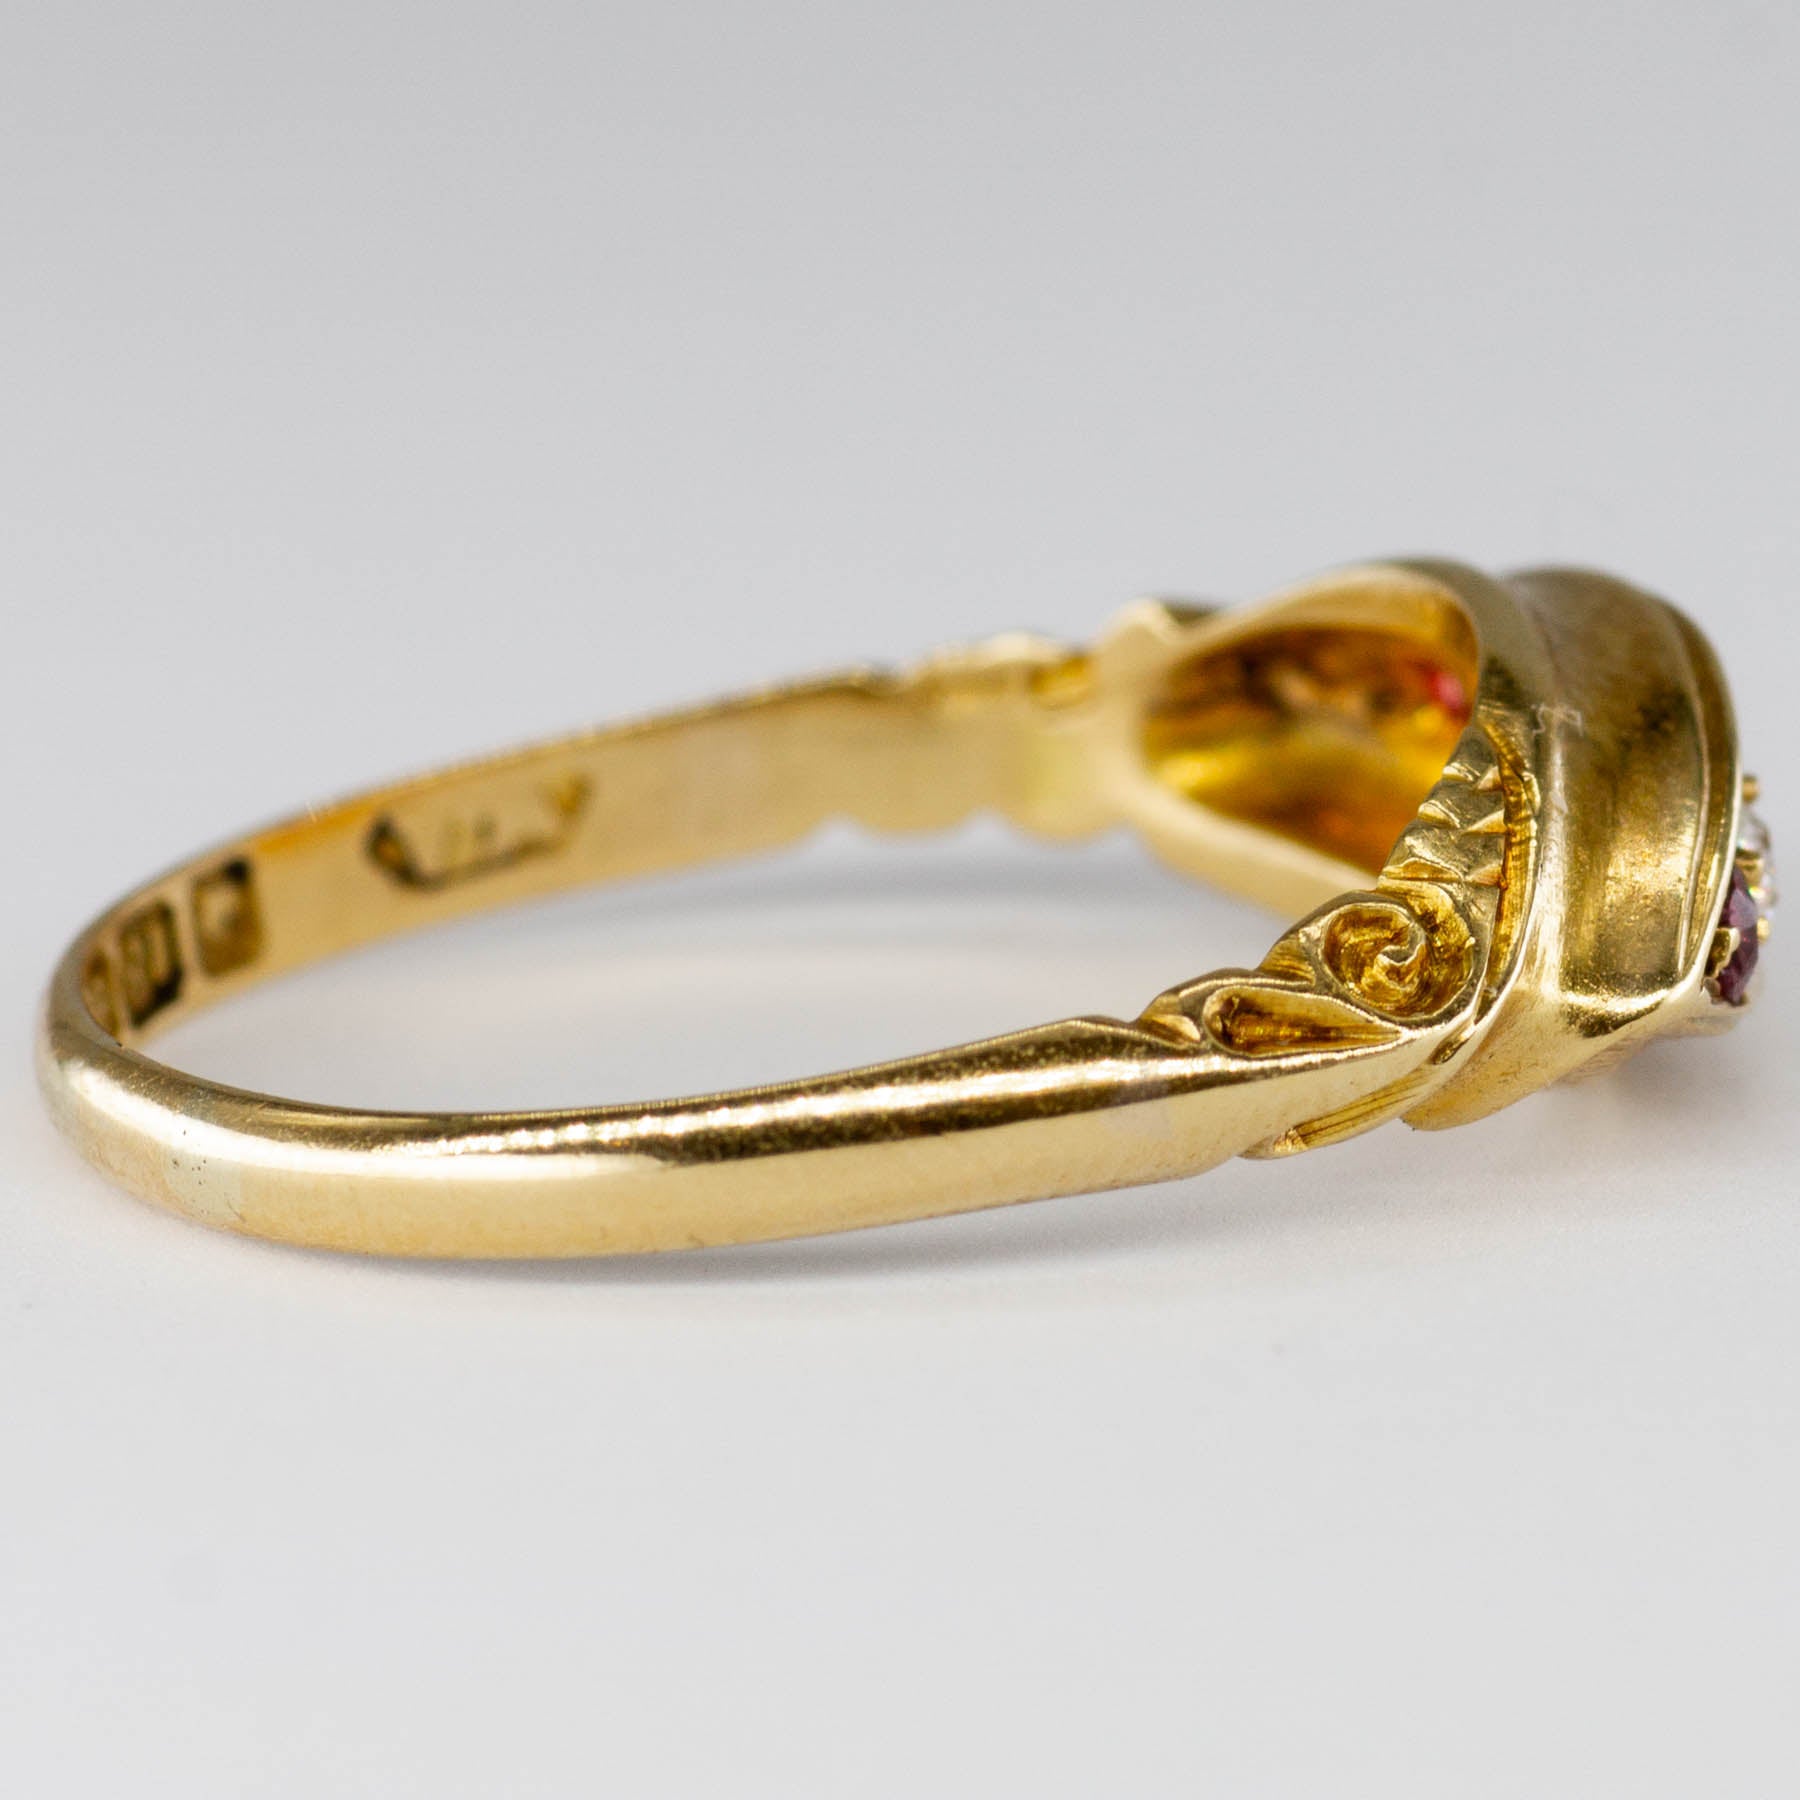 Edwardian 1905 18k Gold Ruby and Diamond Ring  | 0.38ctw | SZ 8.25